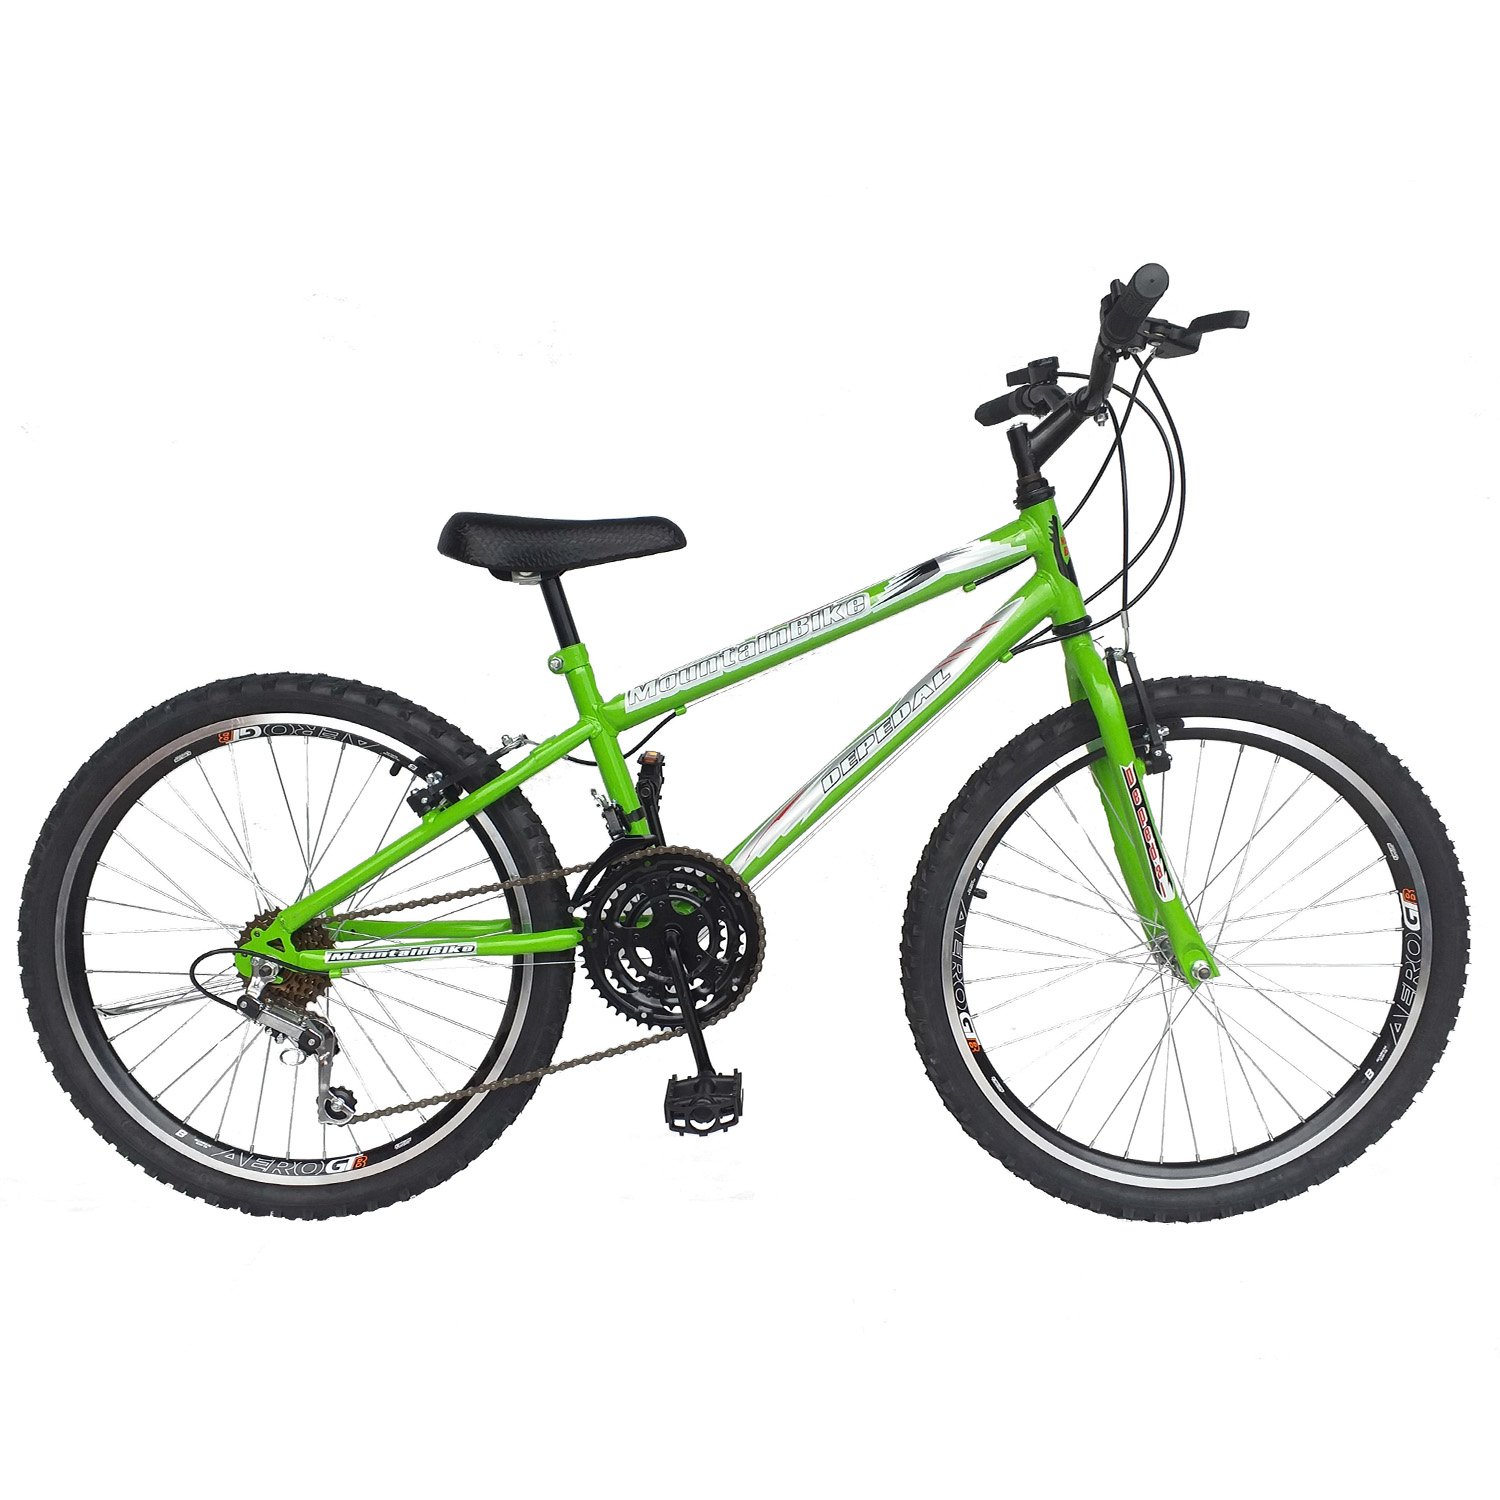 Bicicleta aro 24 masc preta rebaixada com aro aero verde